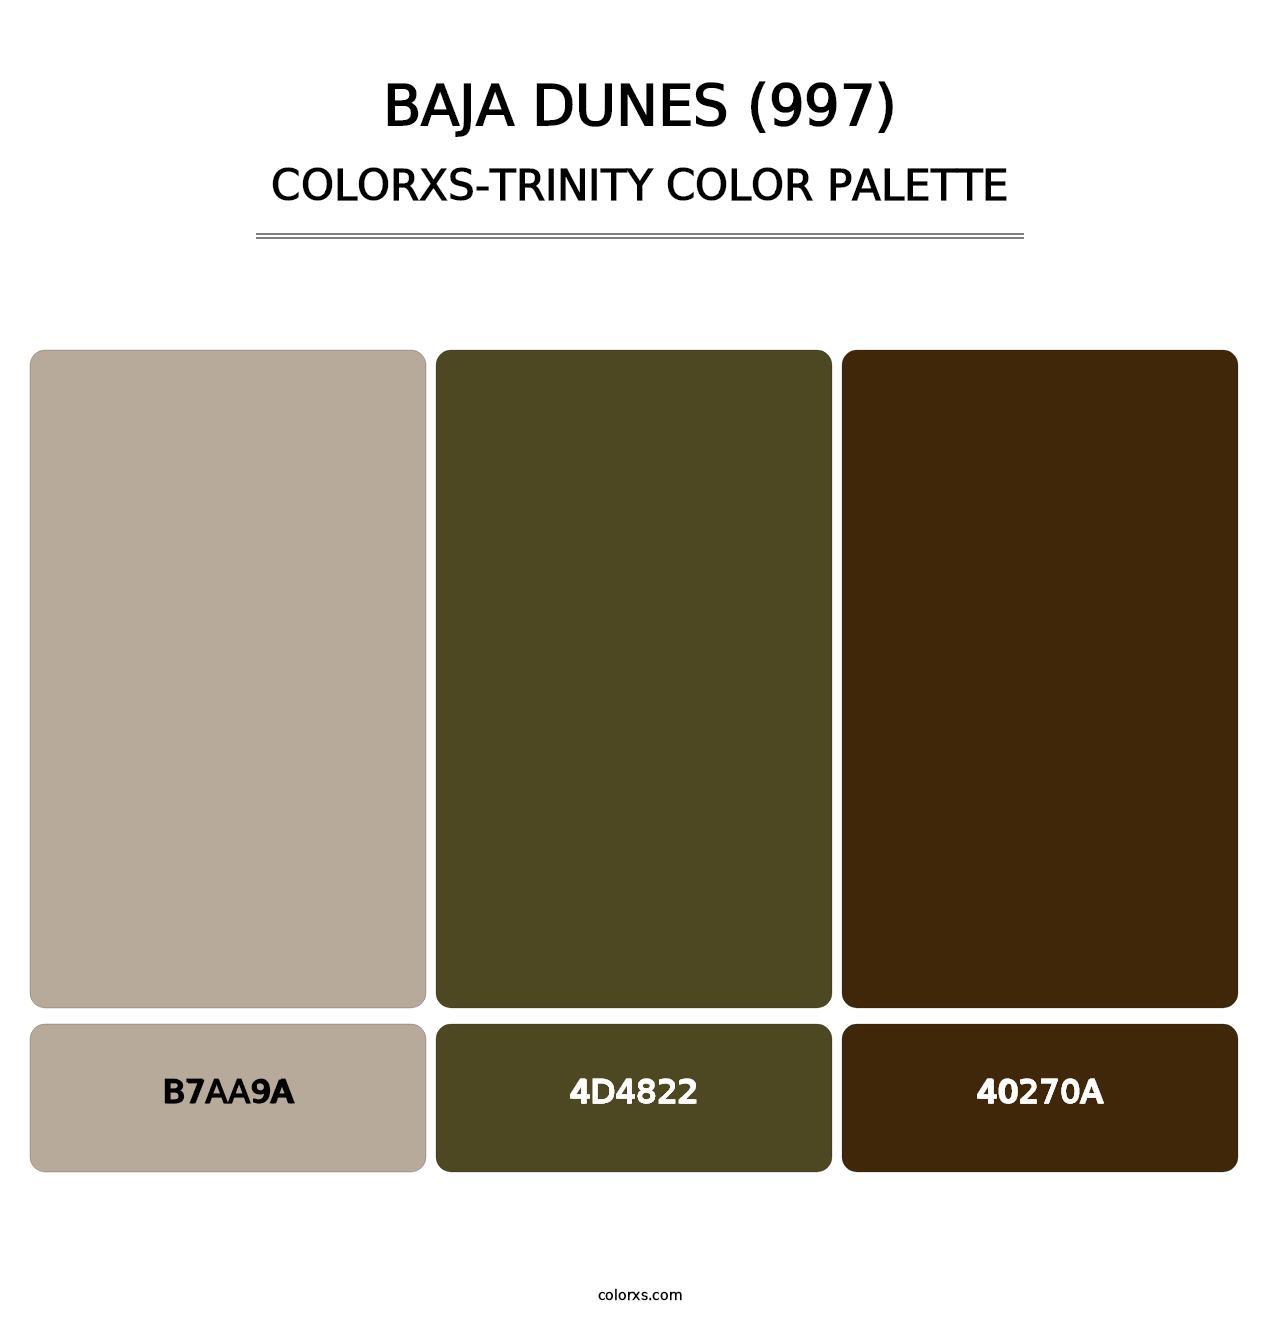 Baja Dunes (997) - Colorxs Trinity Palette